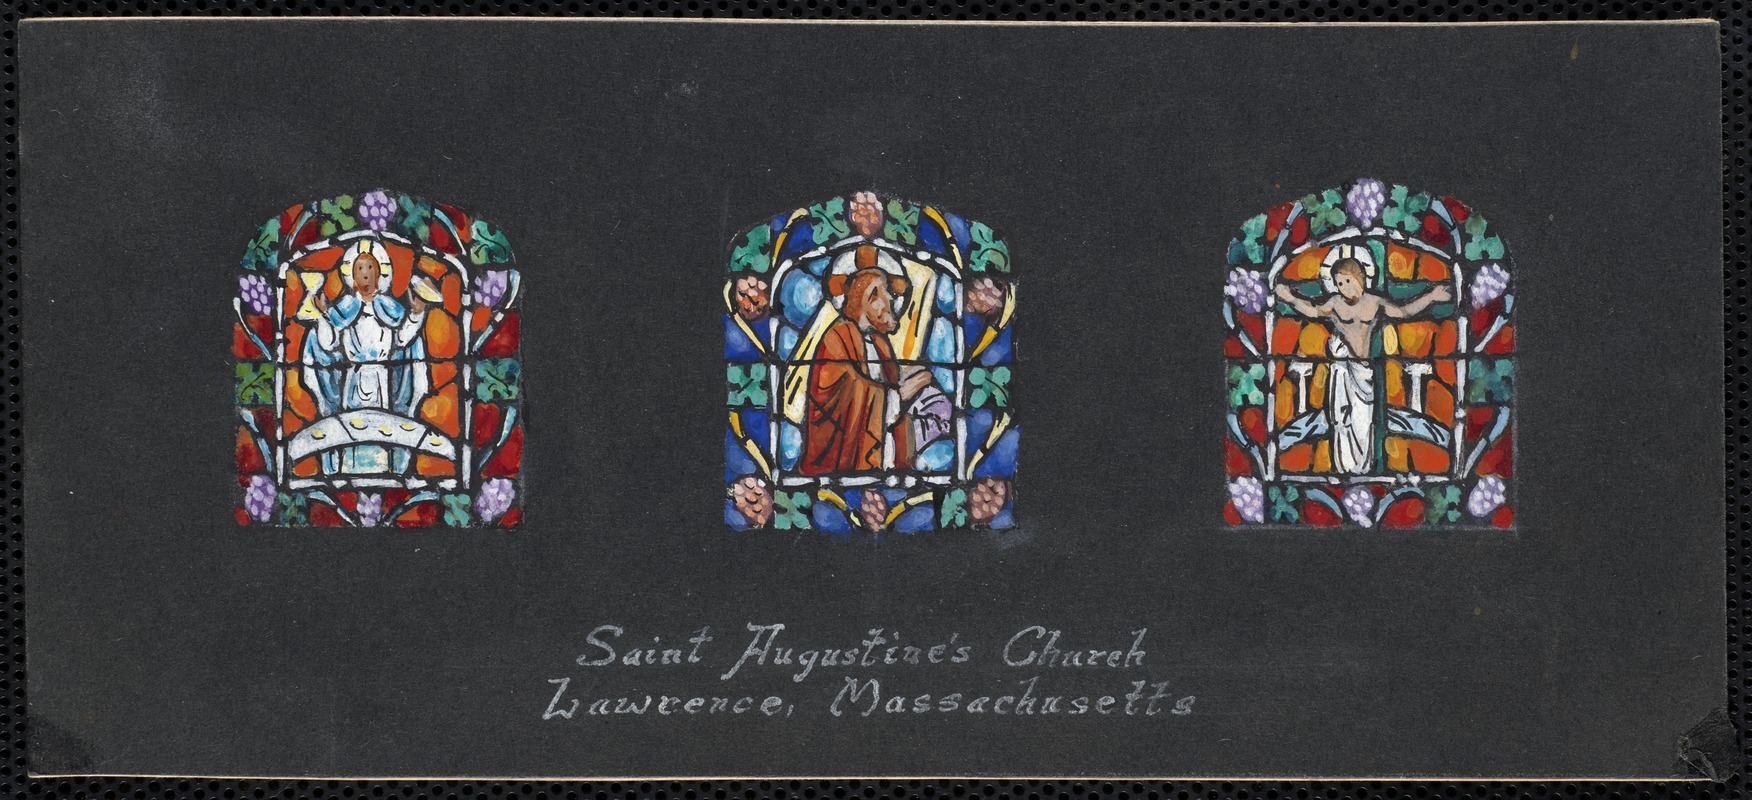 Saint Augustine's Church, Lawrence, Massachusetts. Crucifixion, Gethsemane, Last Supper